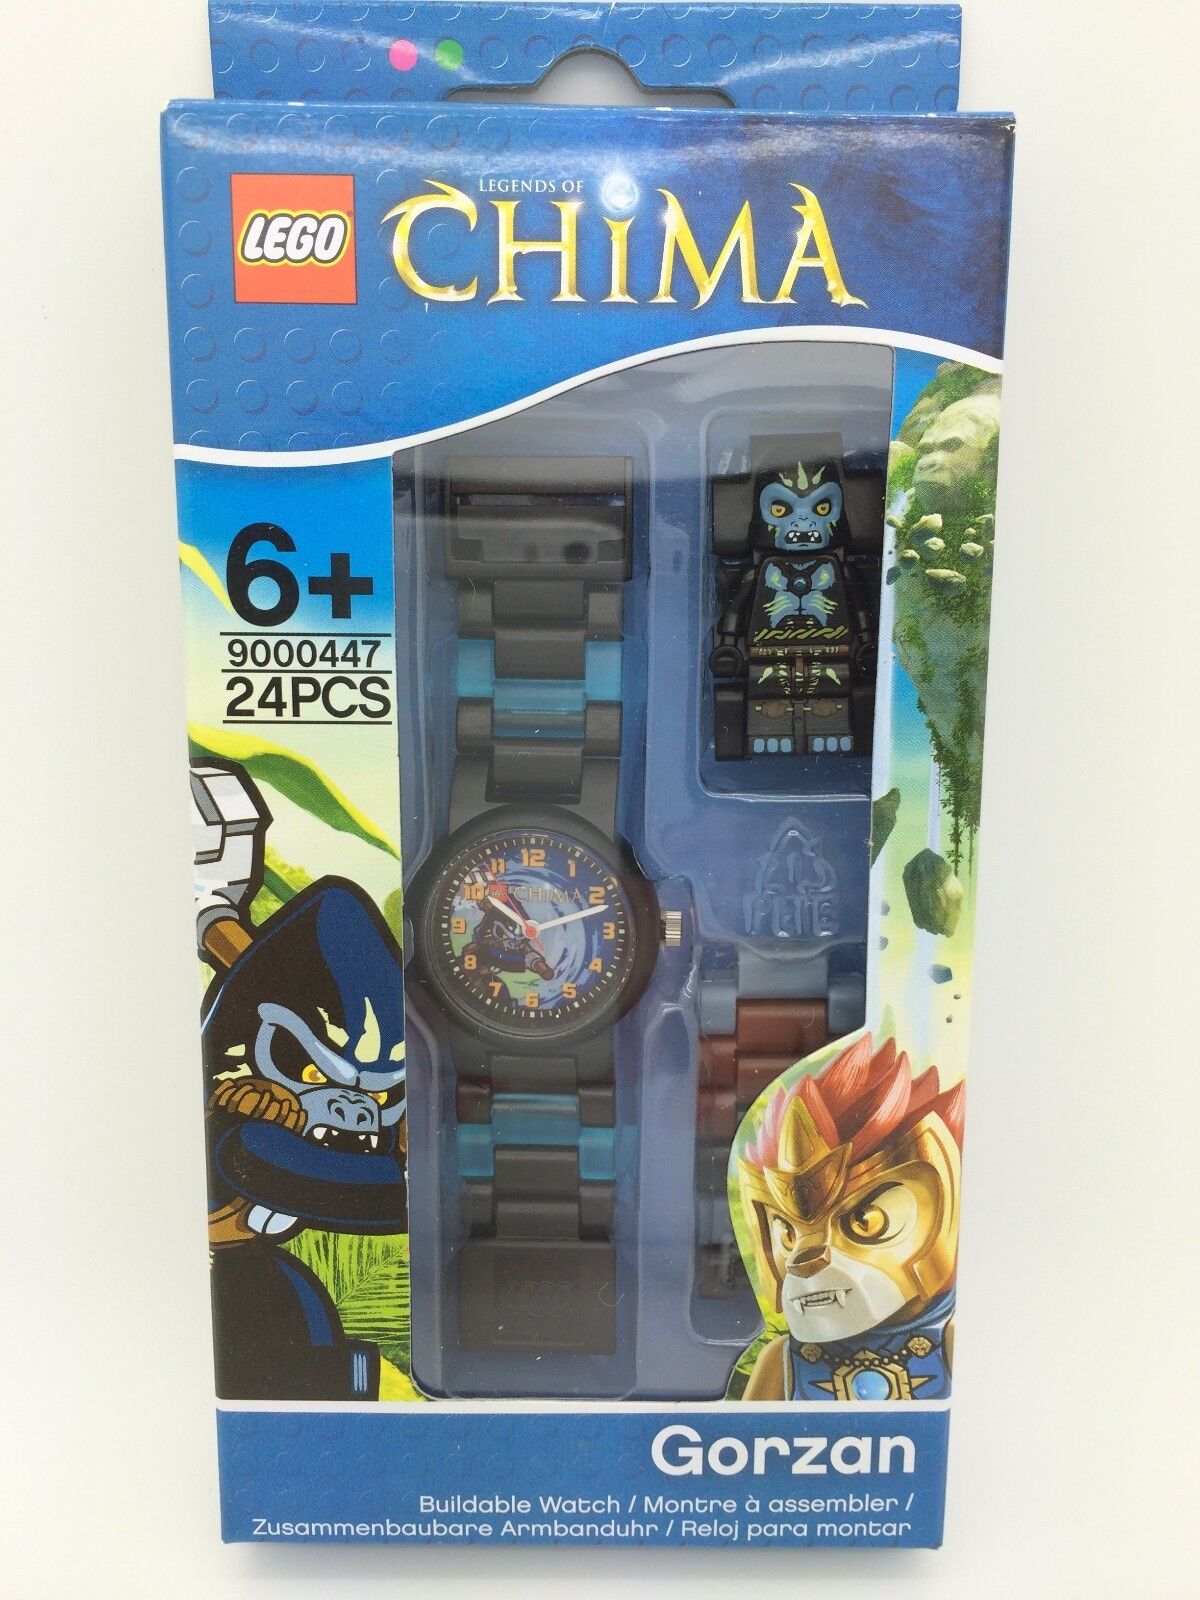 LEGO Legends of Chima Gorzan With Mini-Figure Link Kids Watch 9000447 NEW! 